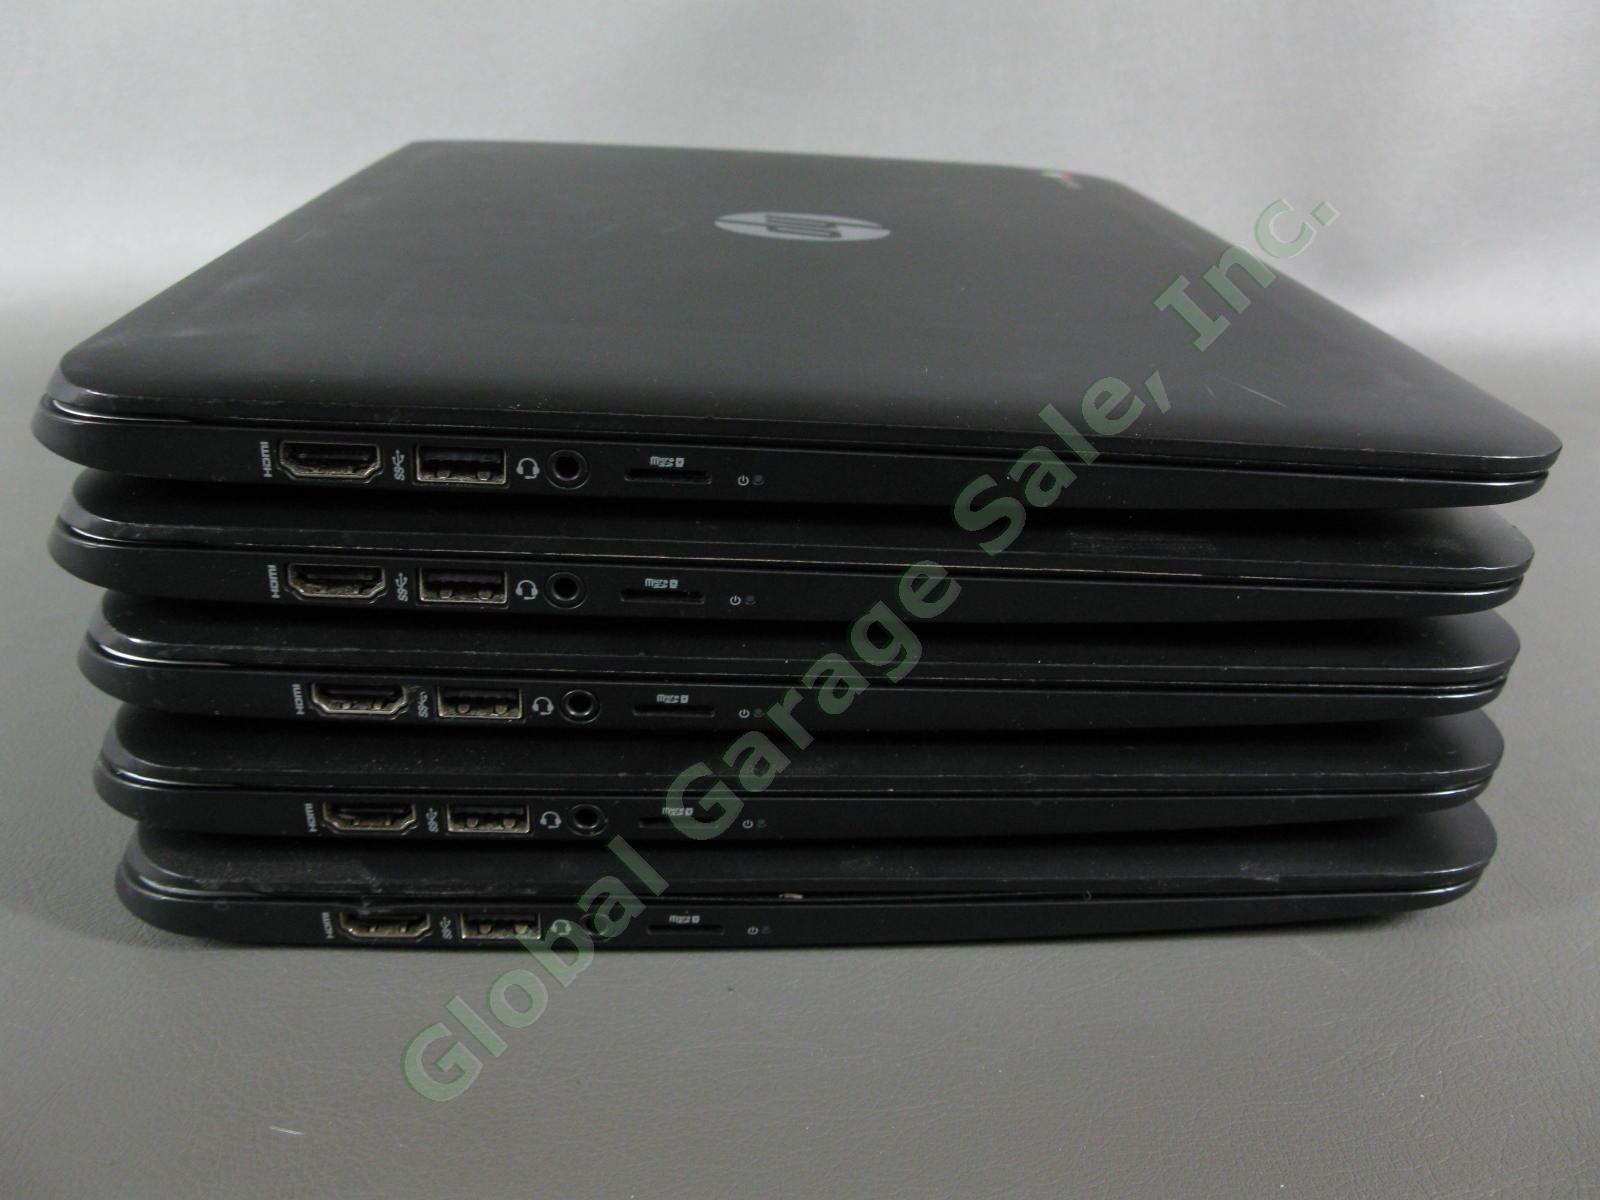 30 HP Chromebook 14 G3 14" Laptop Computer 2.1GHz 4GB RAM 16GB WIFI HDMI Webcam 2